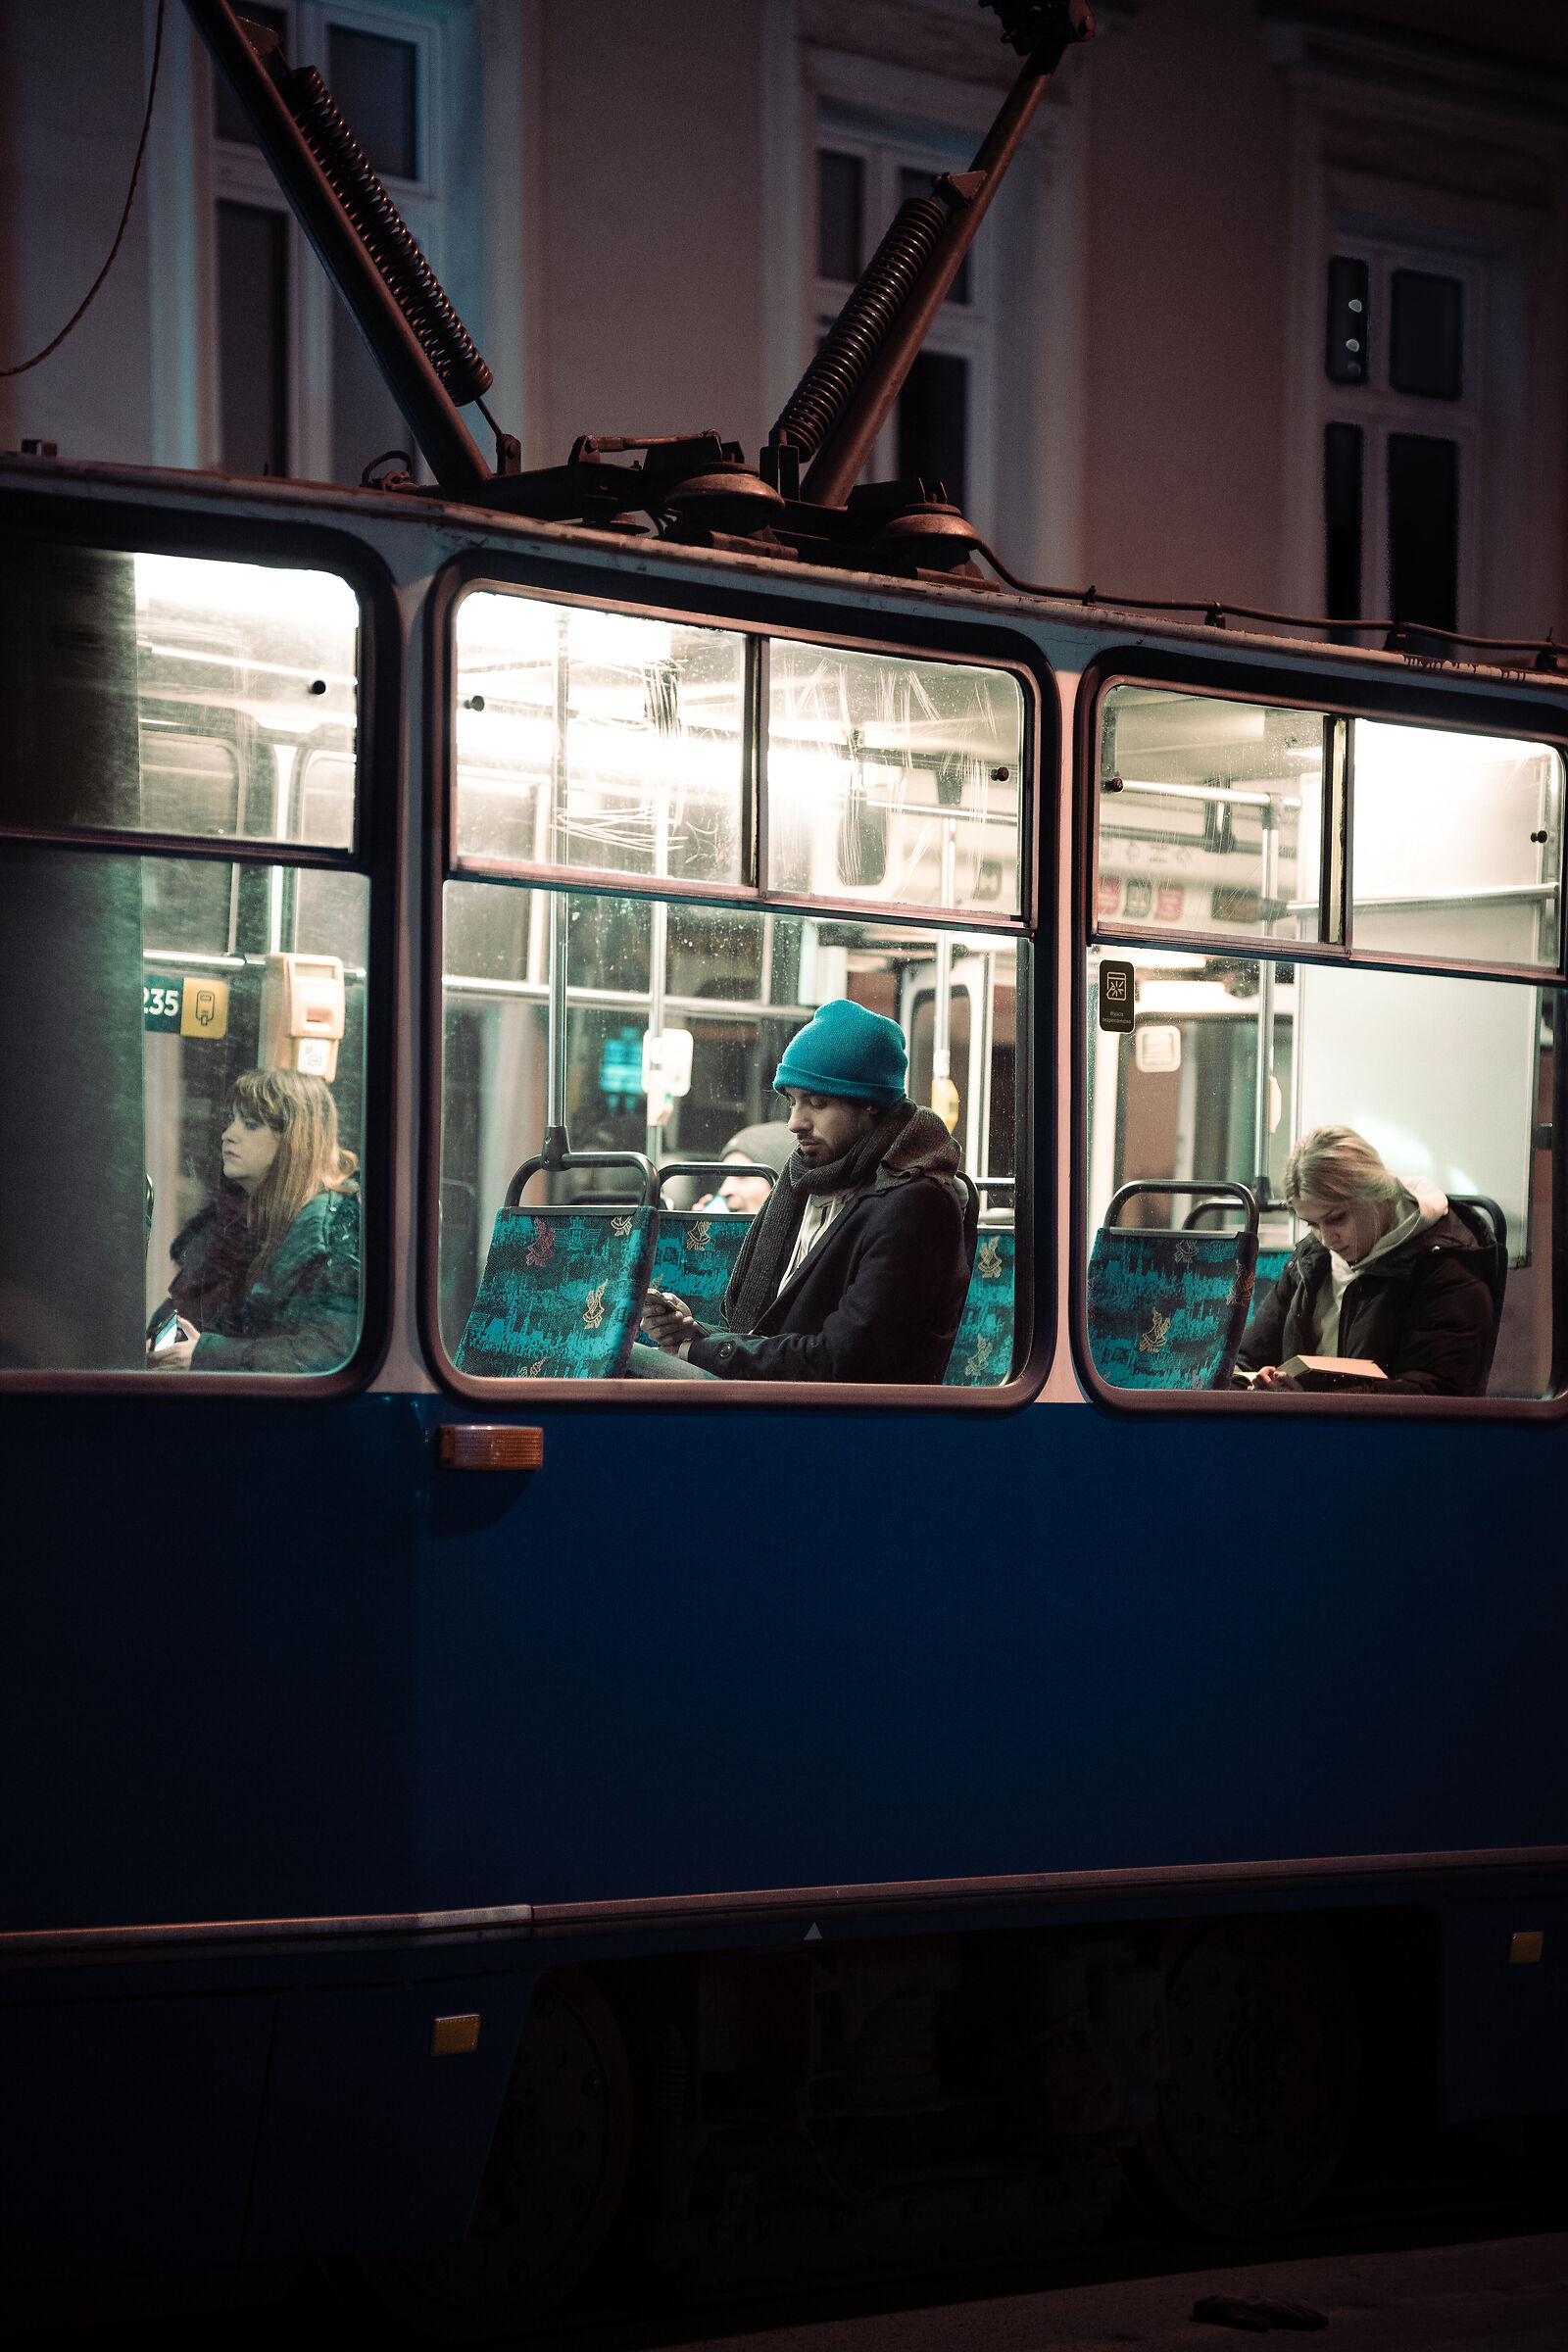 Boy at night on the tram...